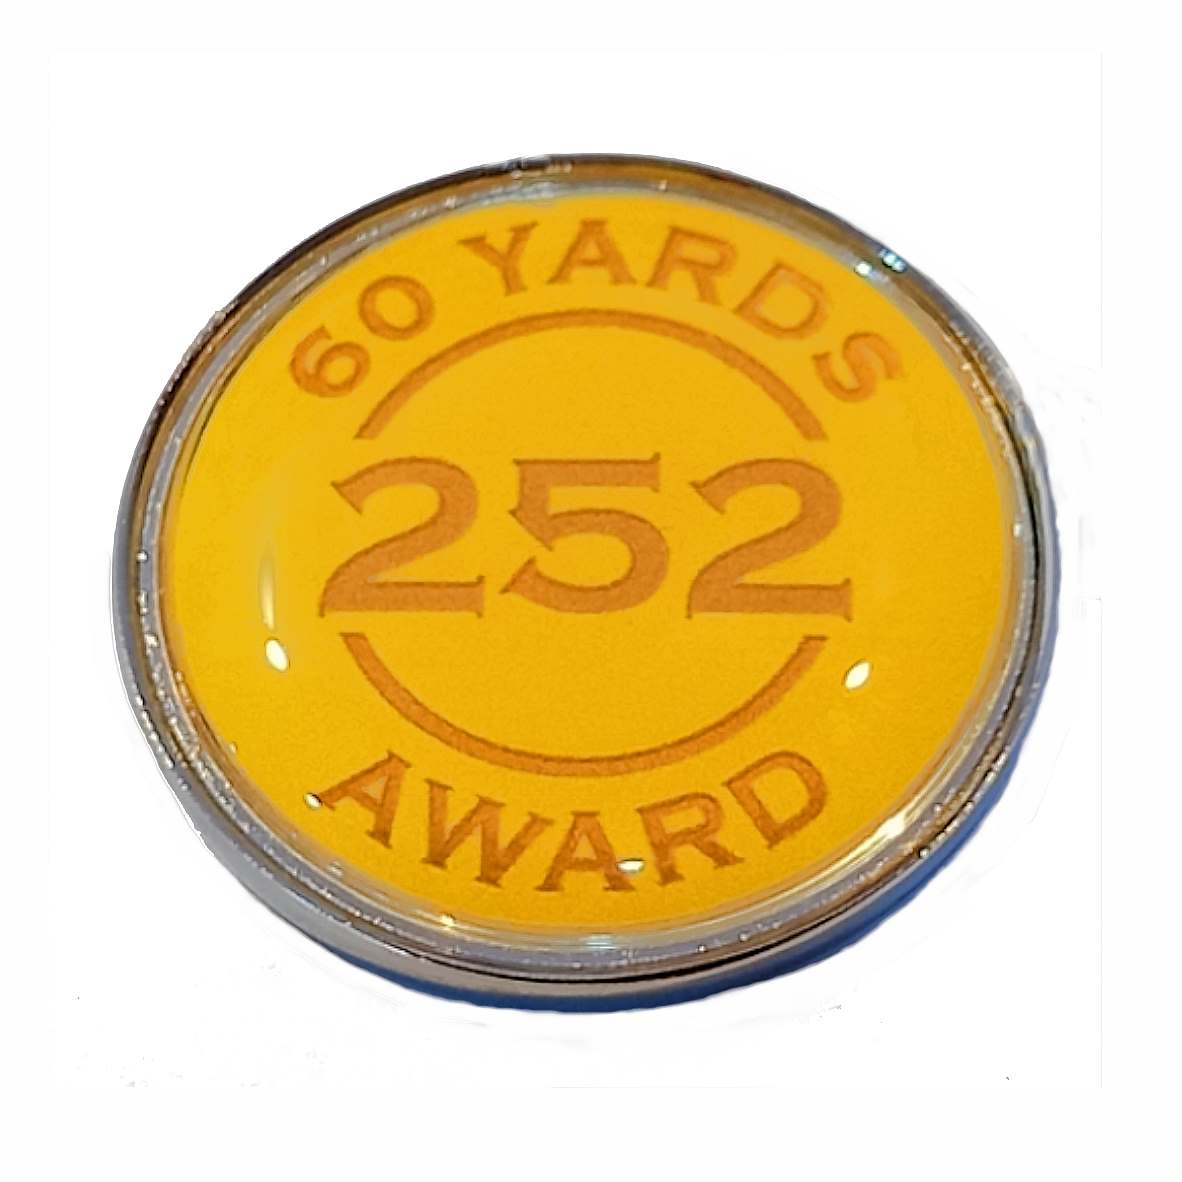 252 Award standard badge